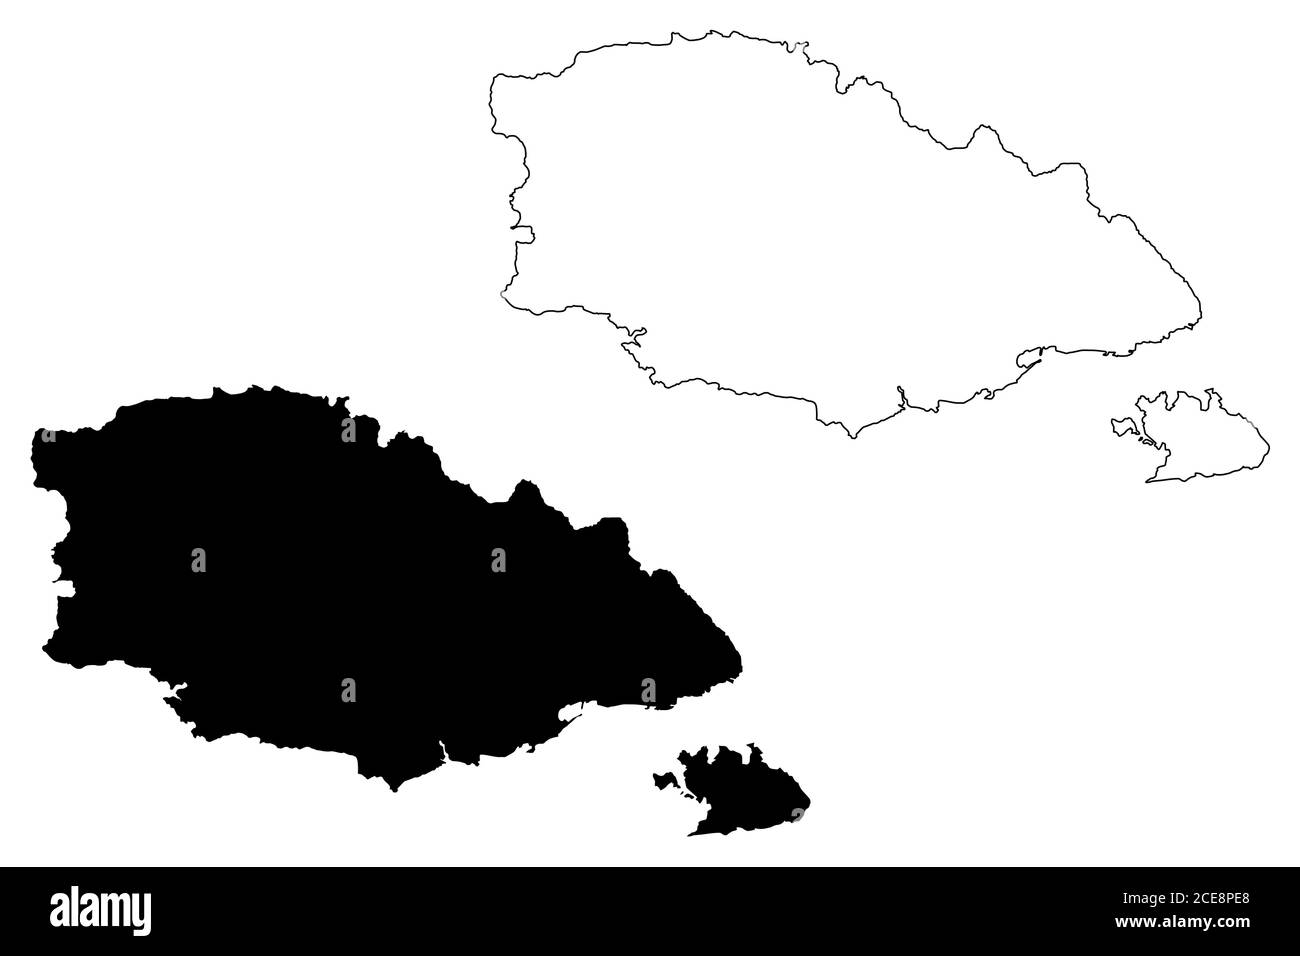 Gozo Region (Republik Malta, Gozo und Comino Insel, Archipel, Regionen von Malta) Karte Vektor Illustration, scribble Skizze Regjun Ghawdex Karte Stock Vektor